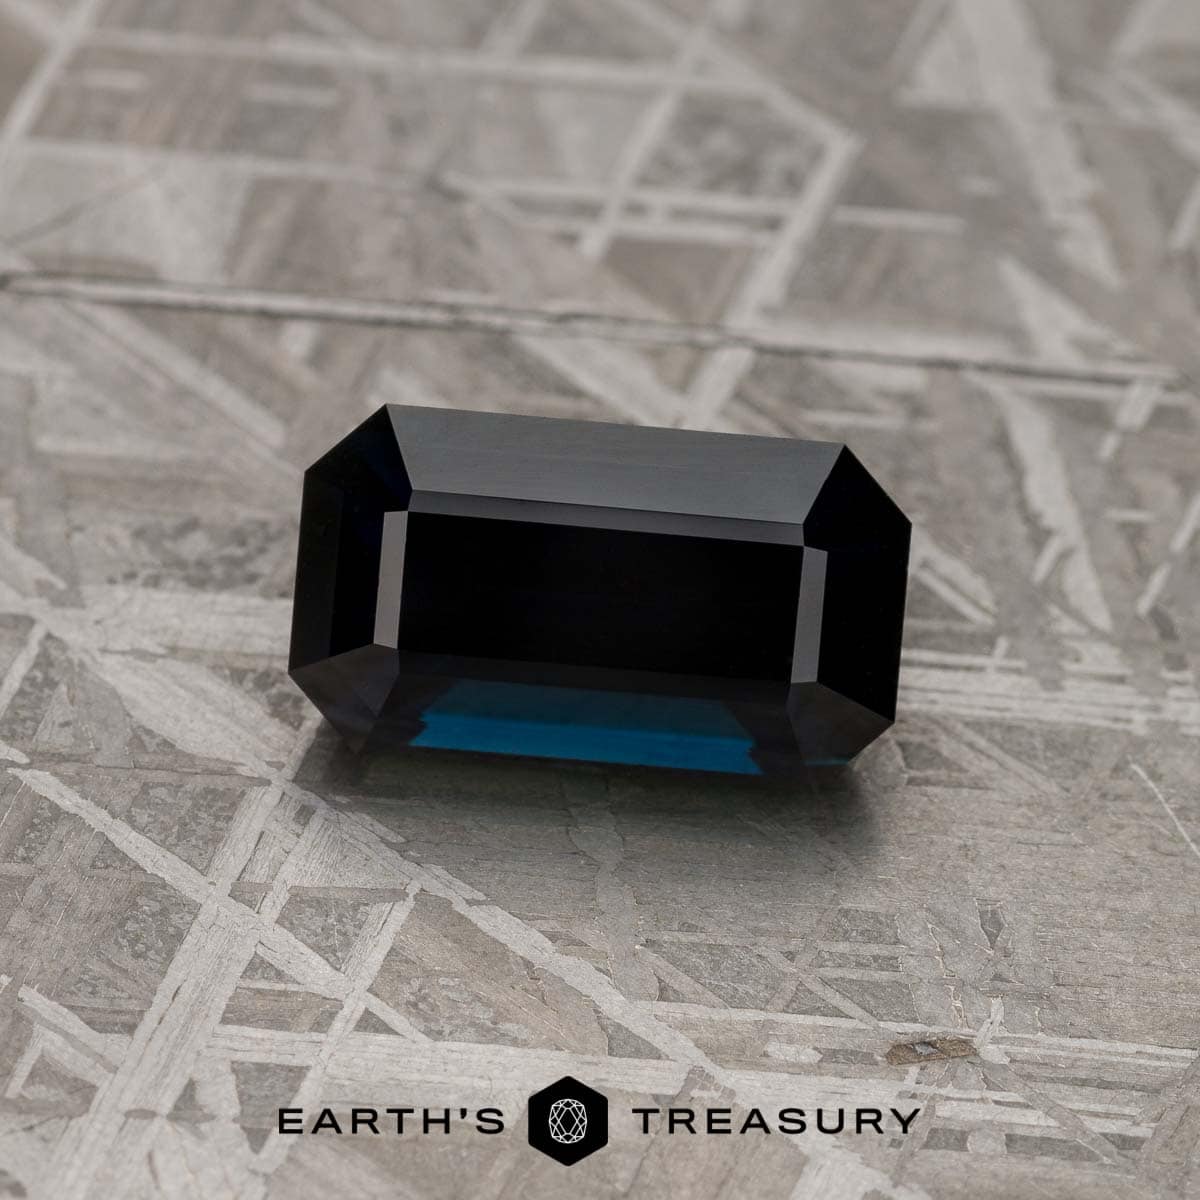 936 Carat Midnight Blue Australian Sapphire Earths Treasury